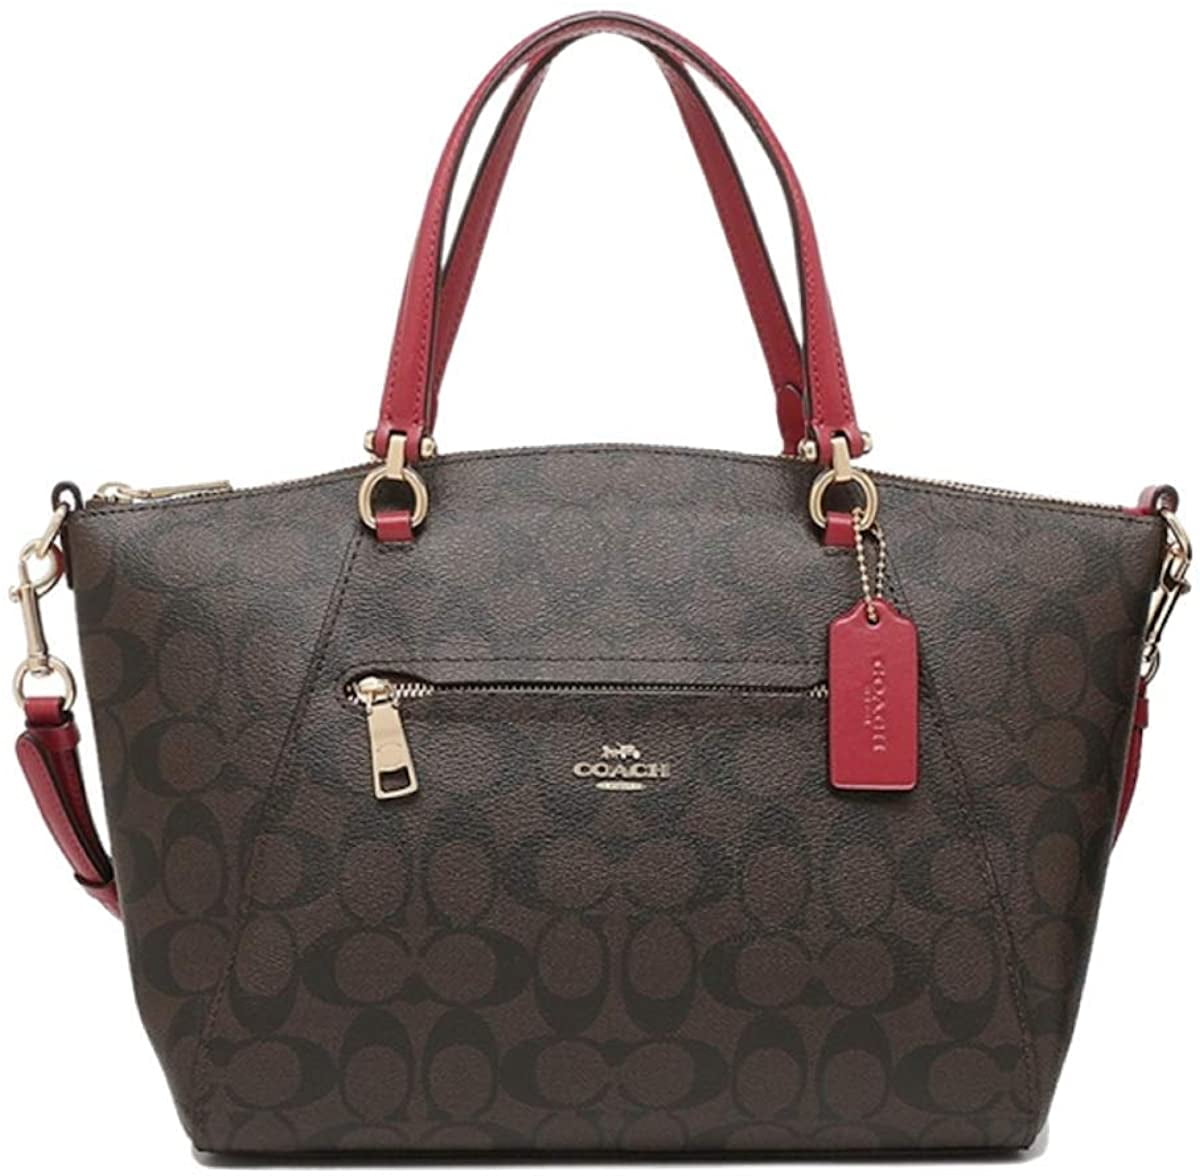 Buy Coach Women's Nolita 19 Bag Purse, Brown Black, at Amazon.in